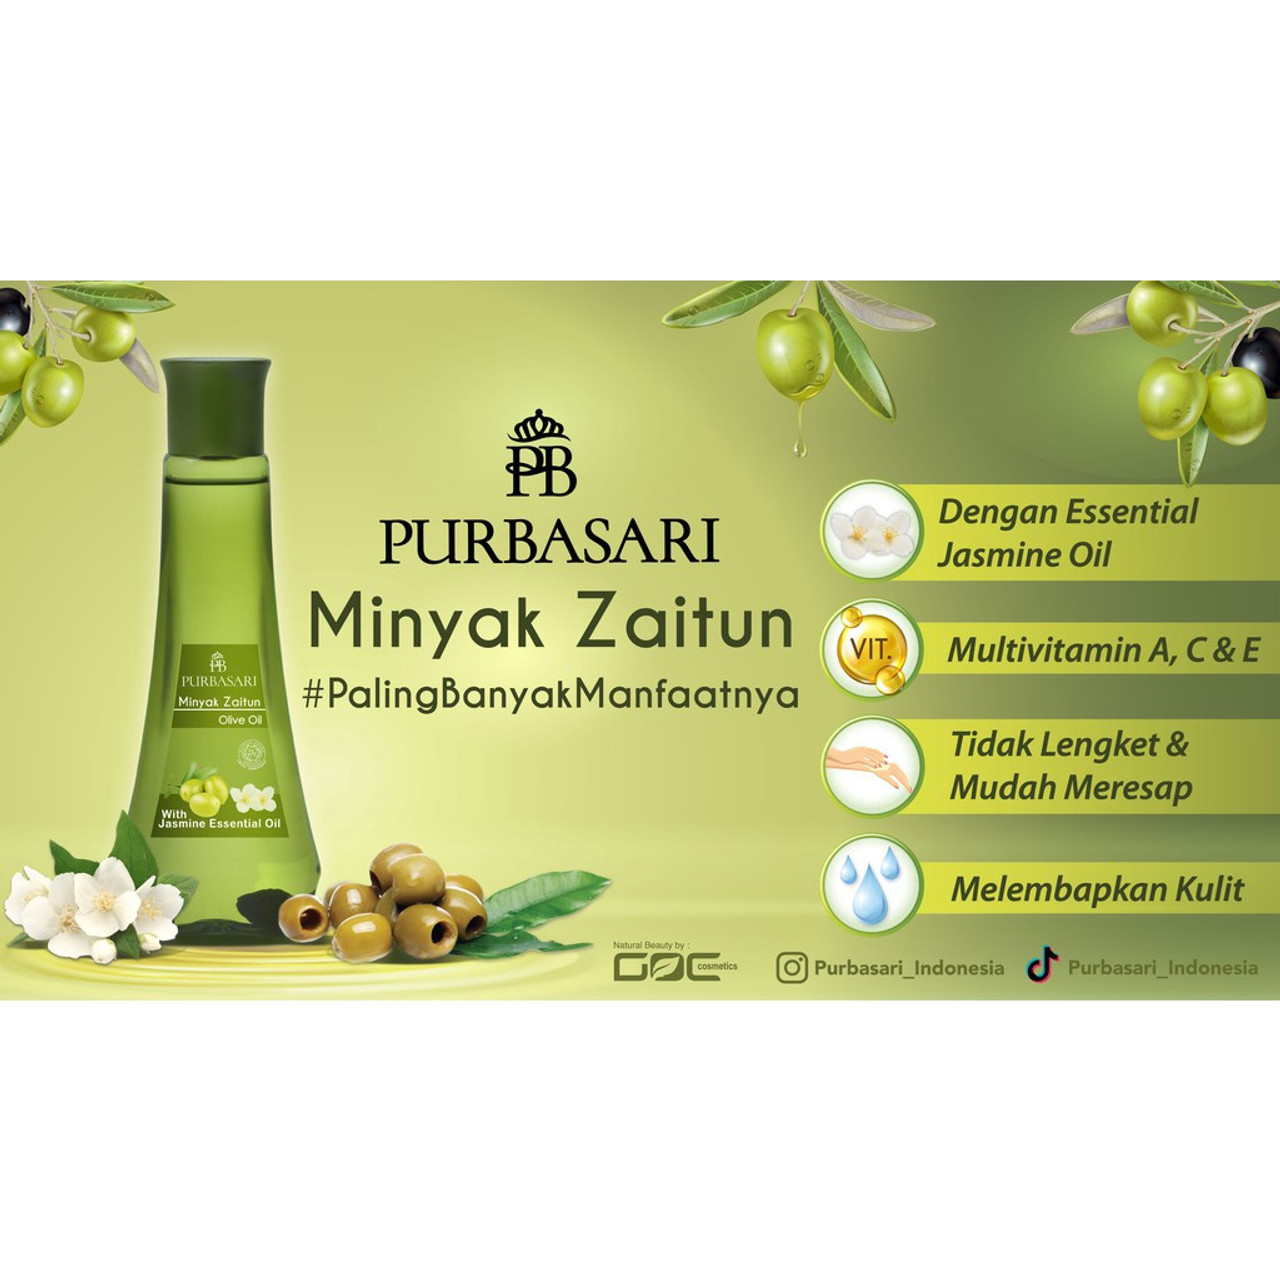 Purbasari Minyak Zaitun - Olive Oil with Jasmine Essential Oil, 150 ml